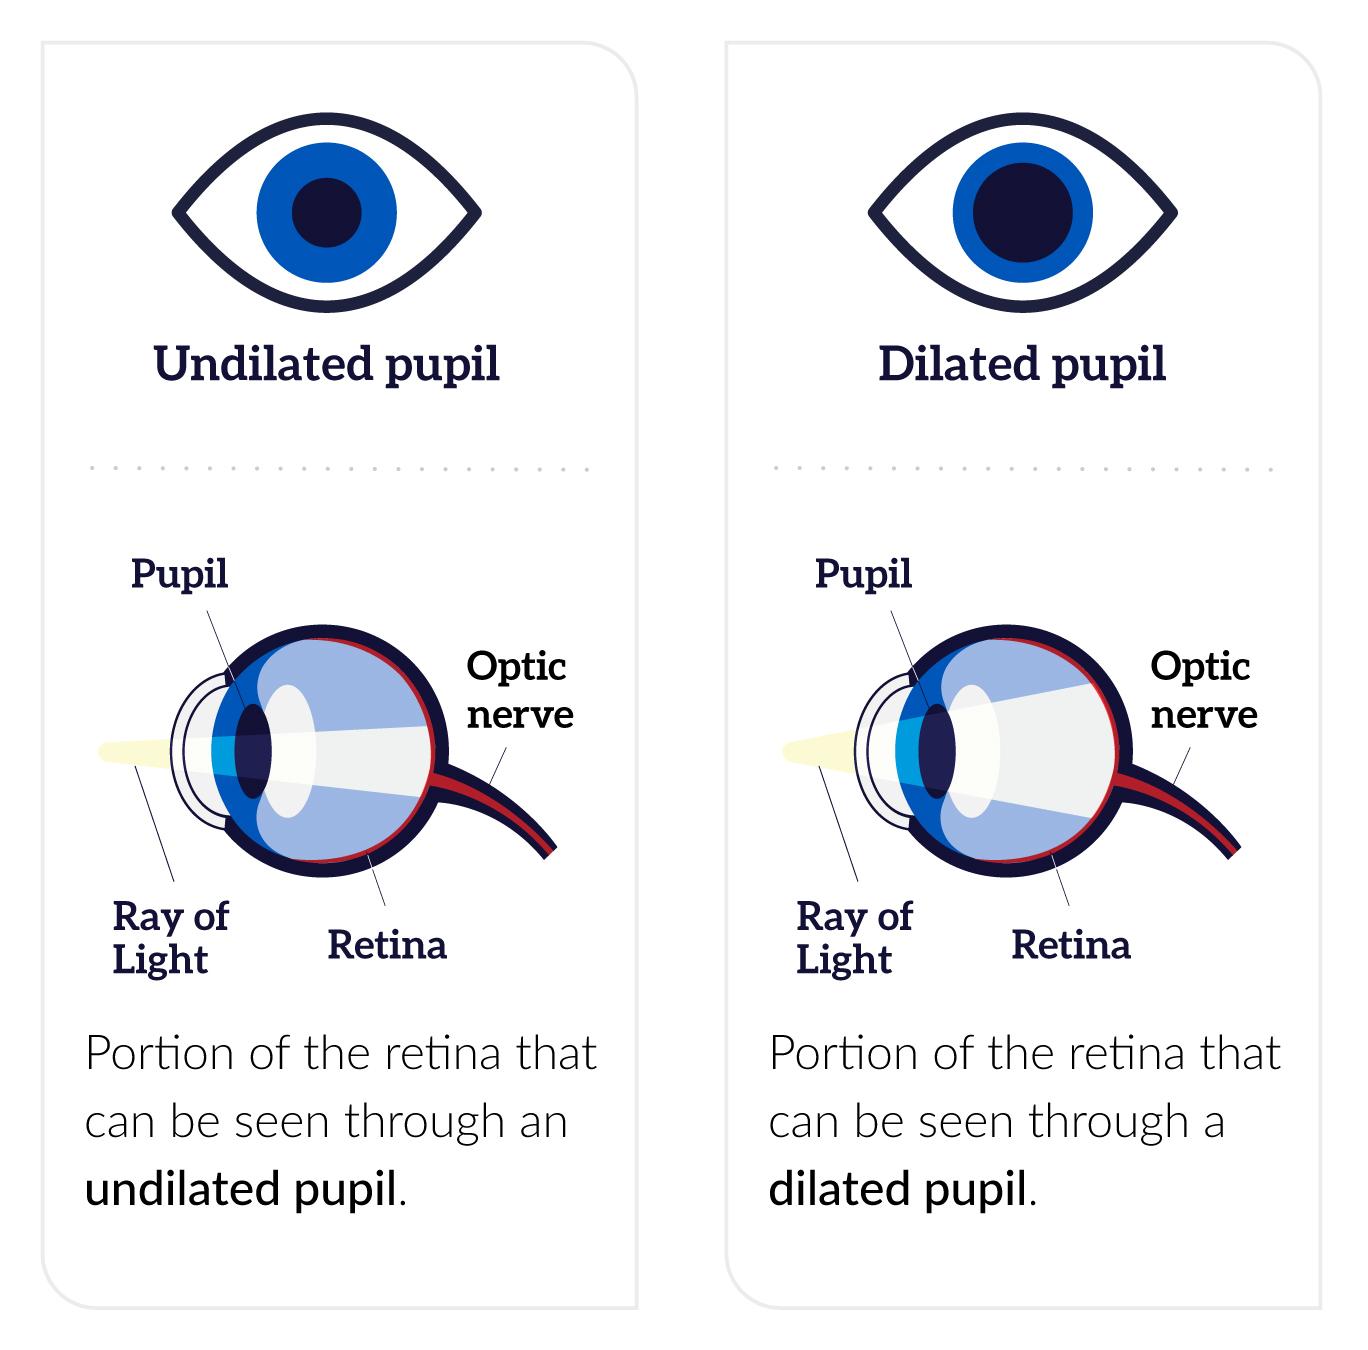 Undilated pupil vs Dilated pupil